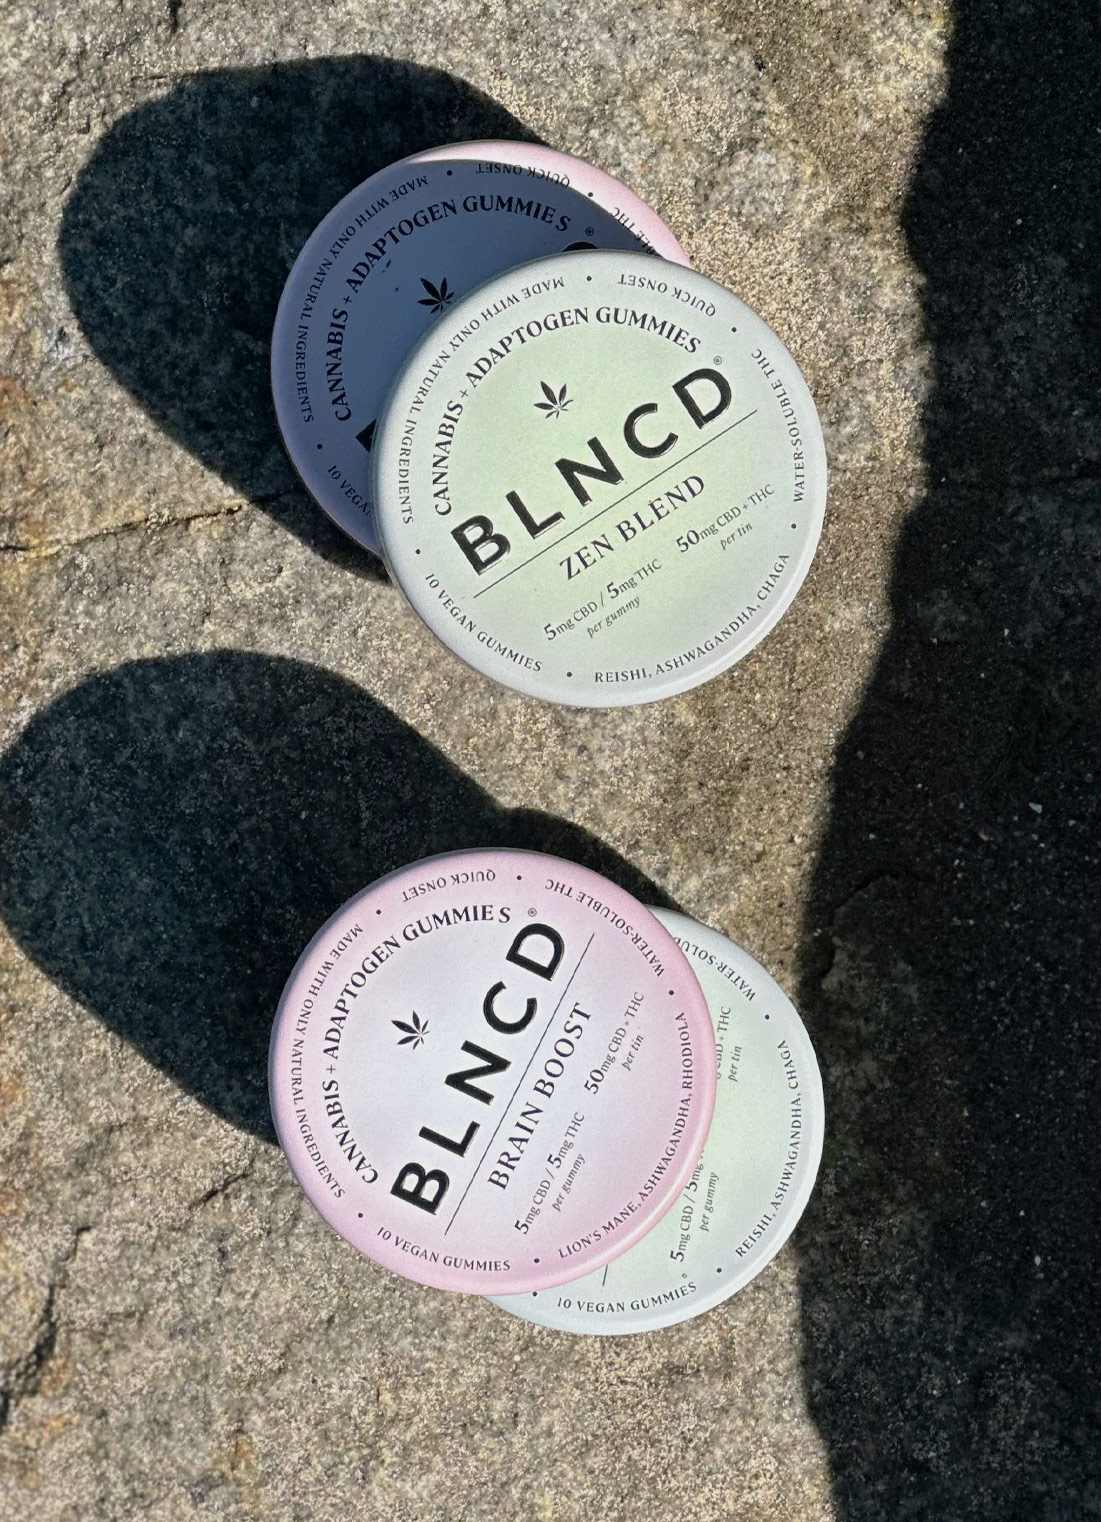 BLNCD Full Spectrum CBD Gummies